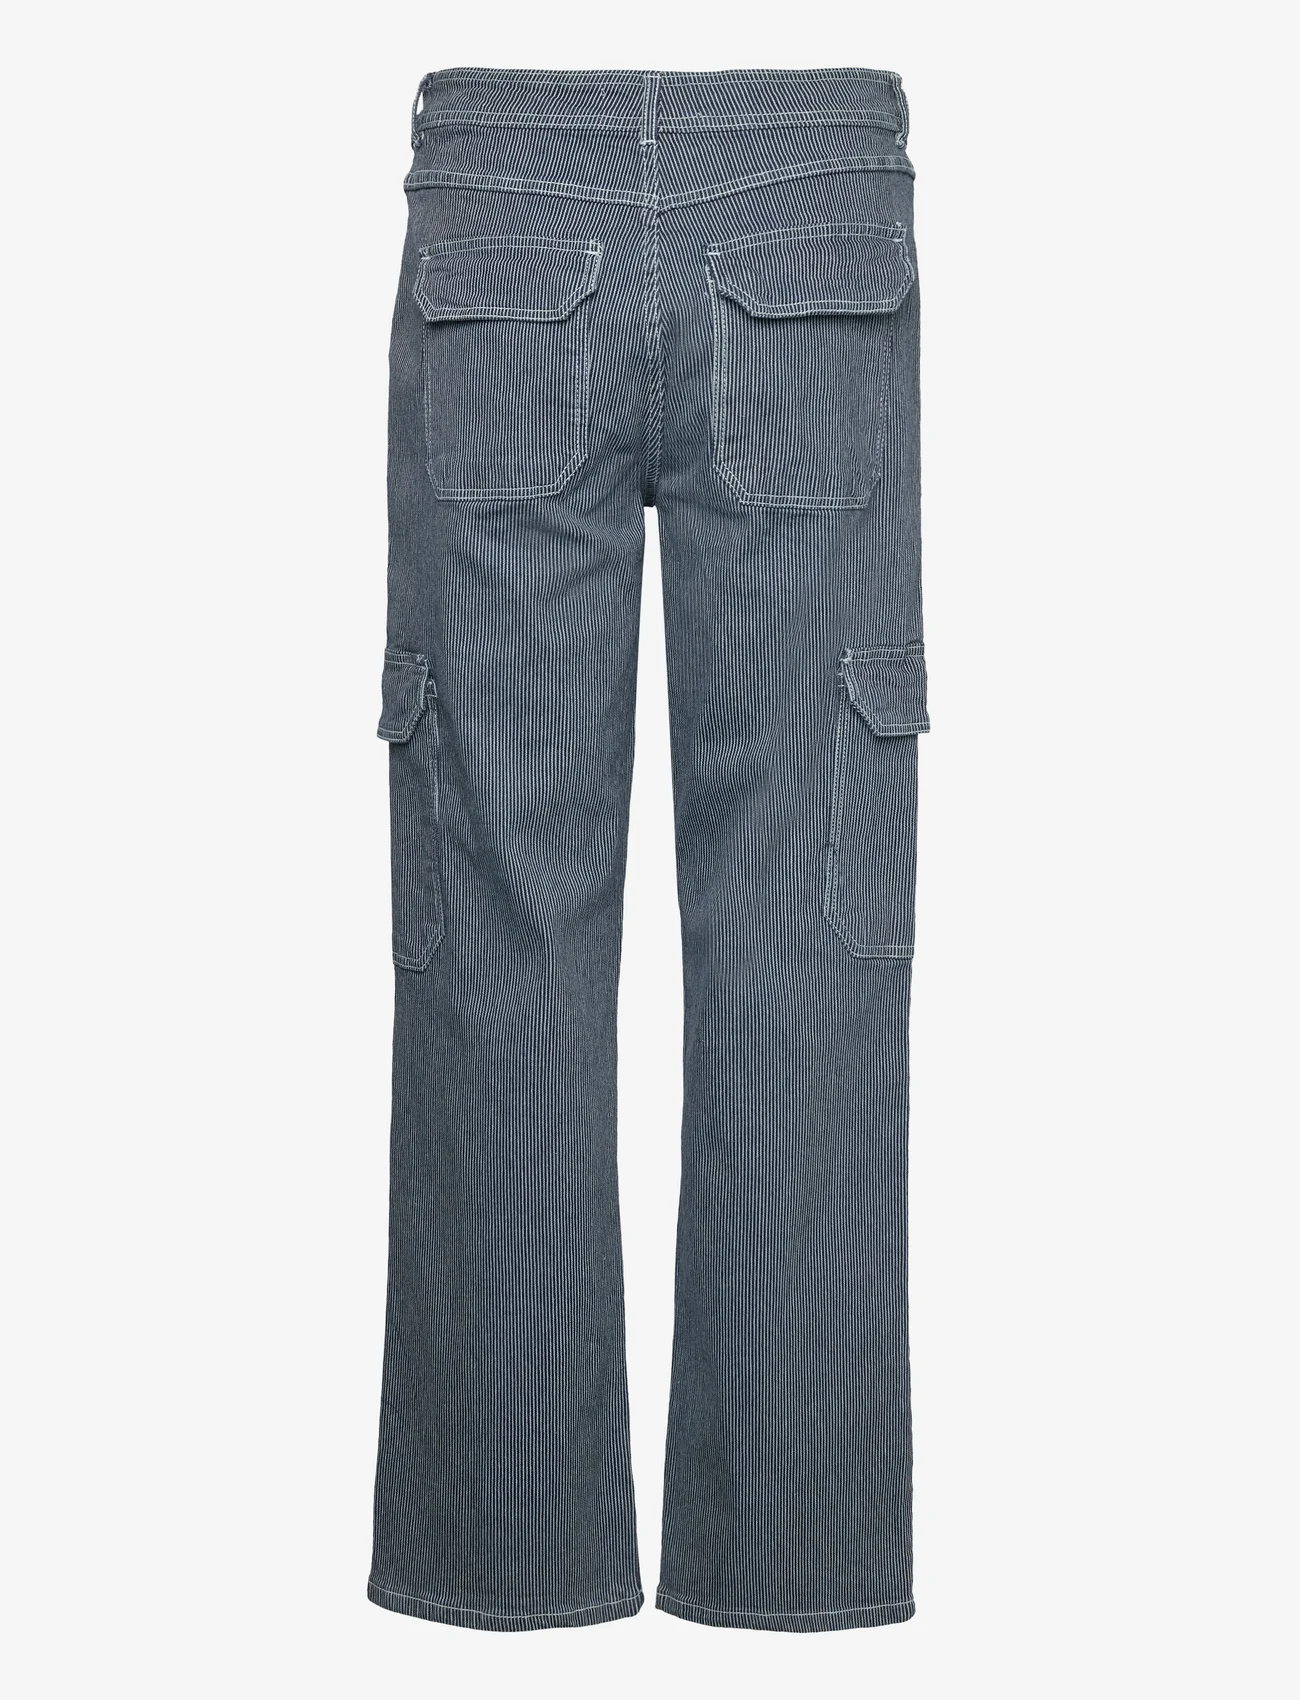 Sofie Schnoor - Jeans - cargo kelnės - blue - 1